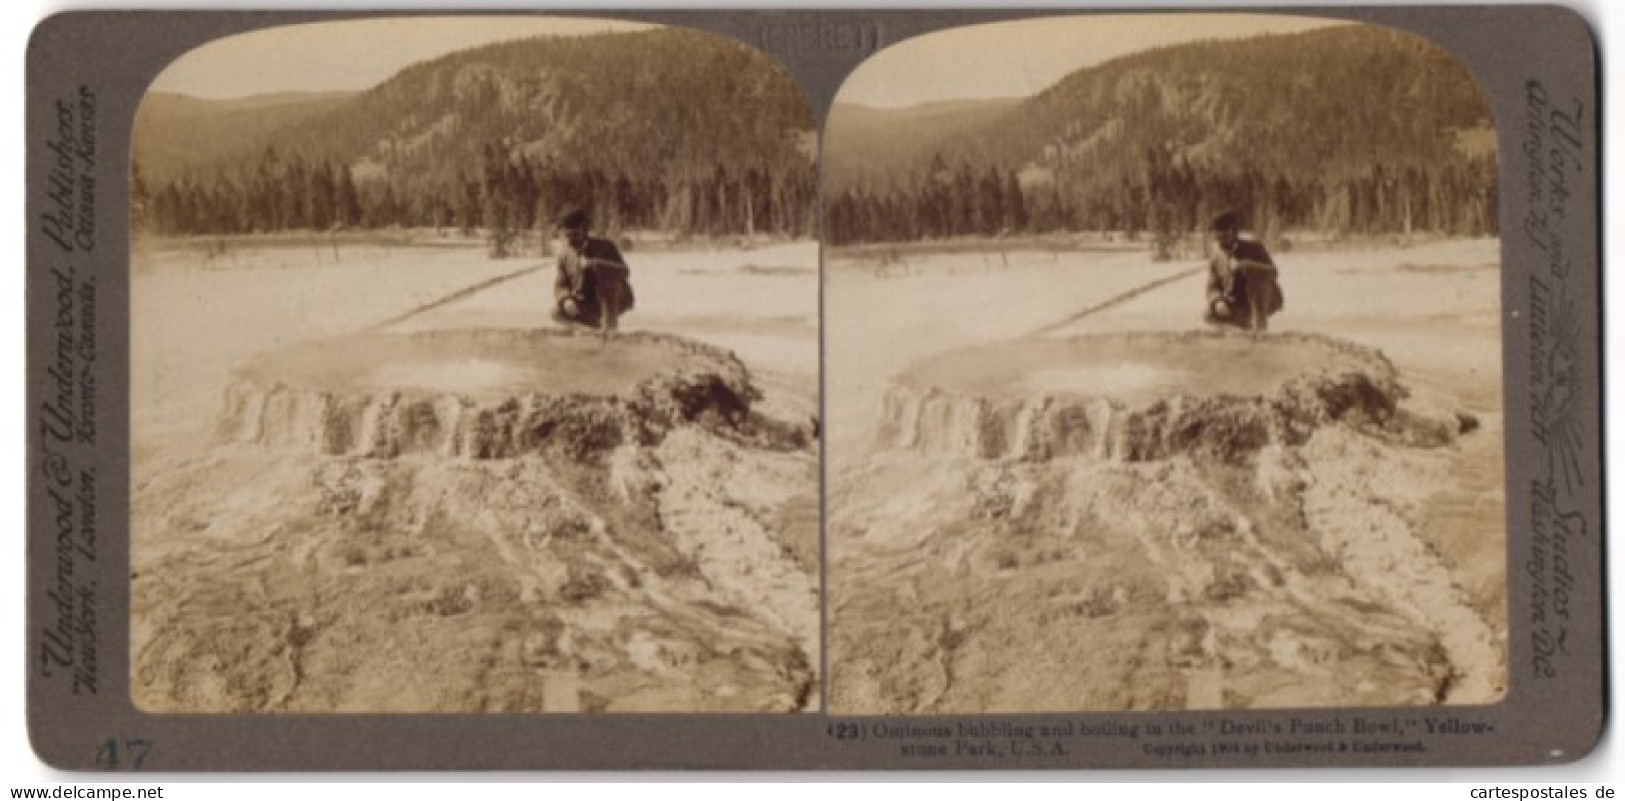 Stereo-Fotografie Underwood & Underwood, New York, Ansicht Yellowstone Park, Geysir Devil's Punch Bowl  - Fotos Estereoscópicas